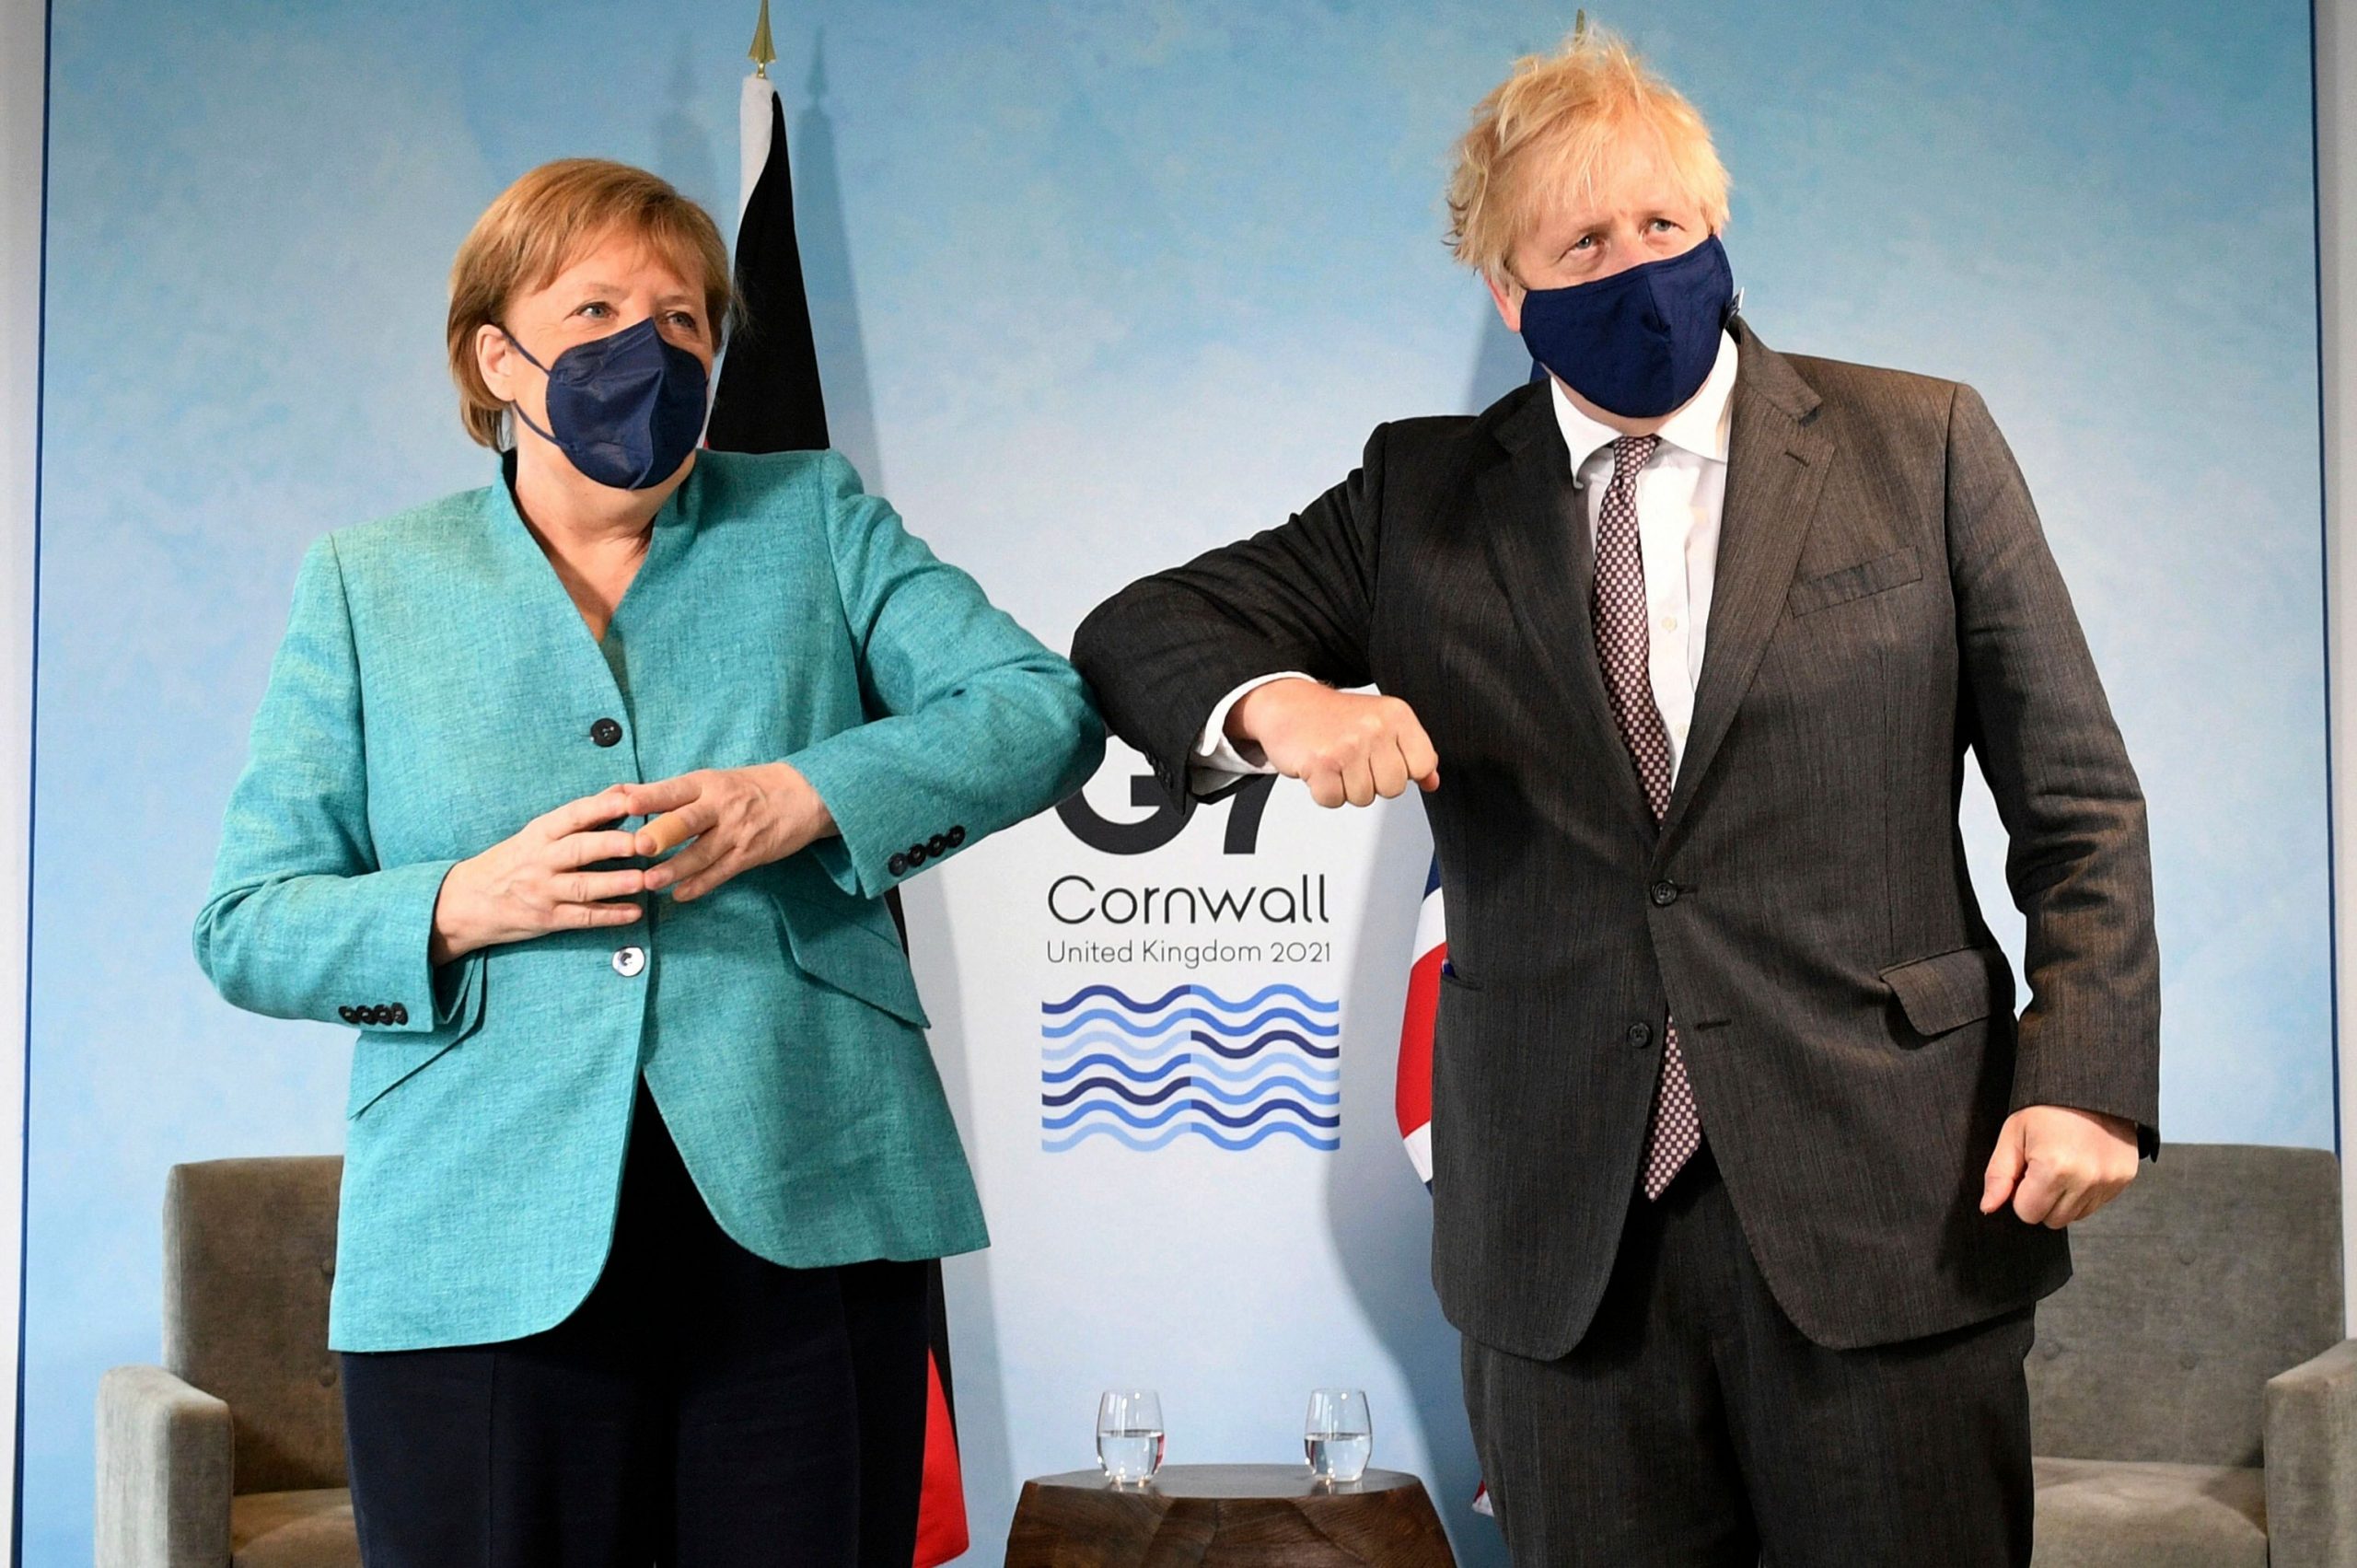 When Angela Merkel ignored Boris Johnson’s elbow bump at G7 summit